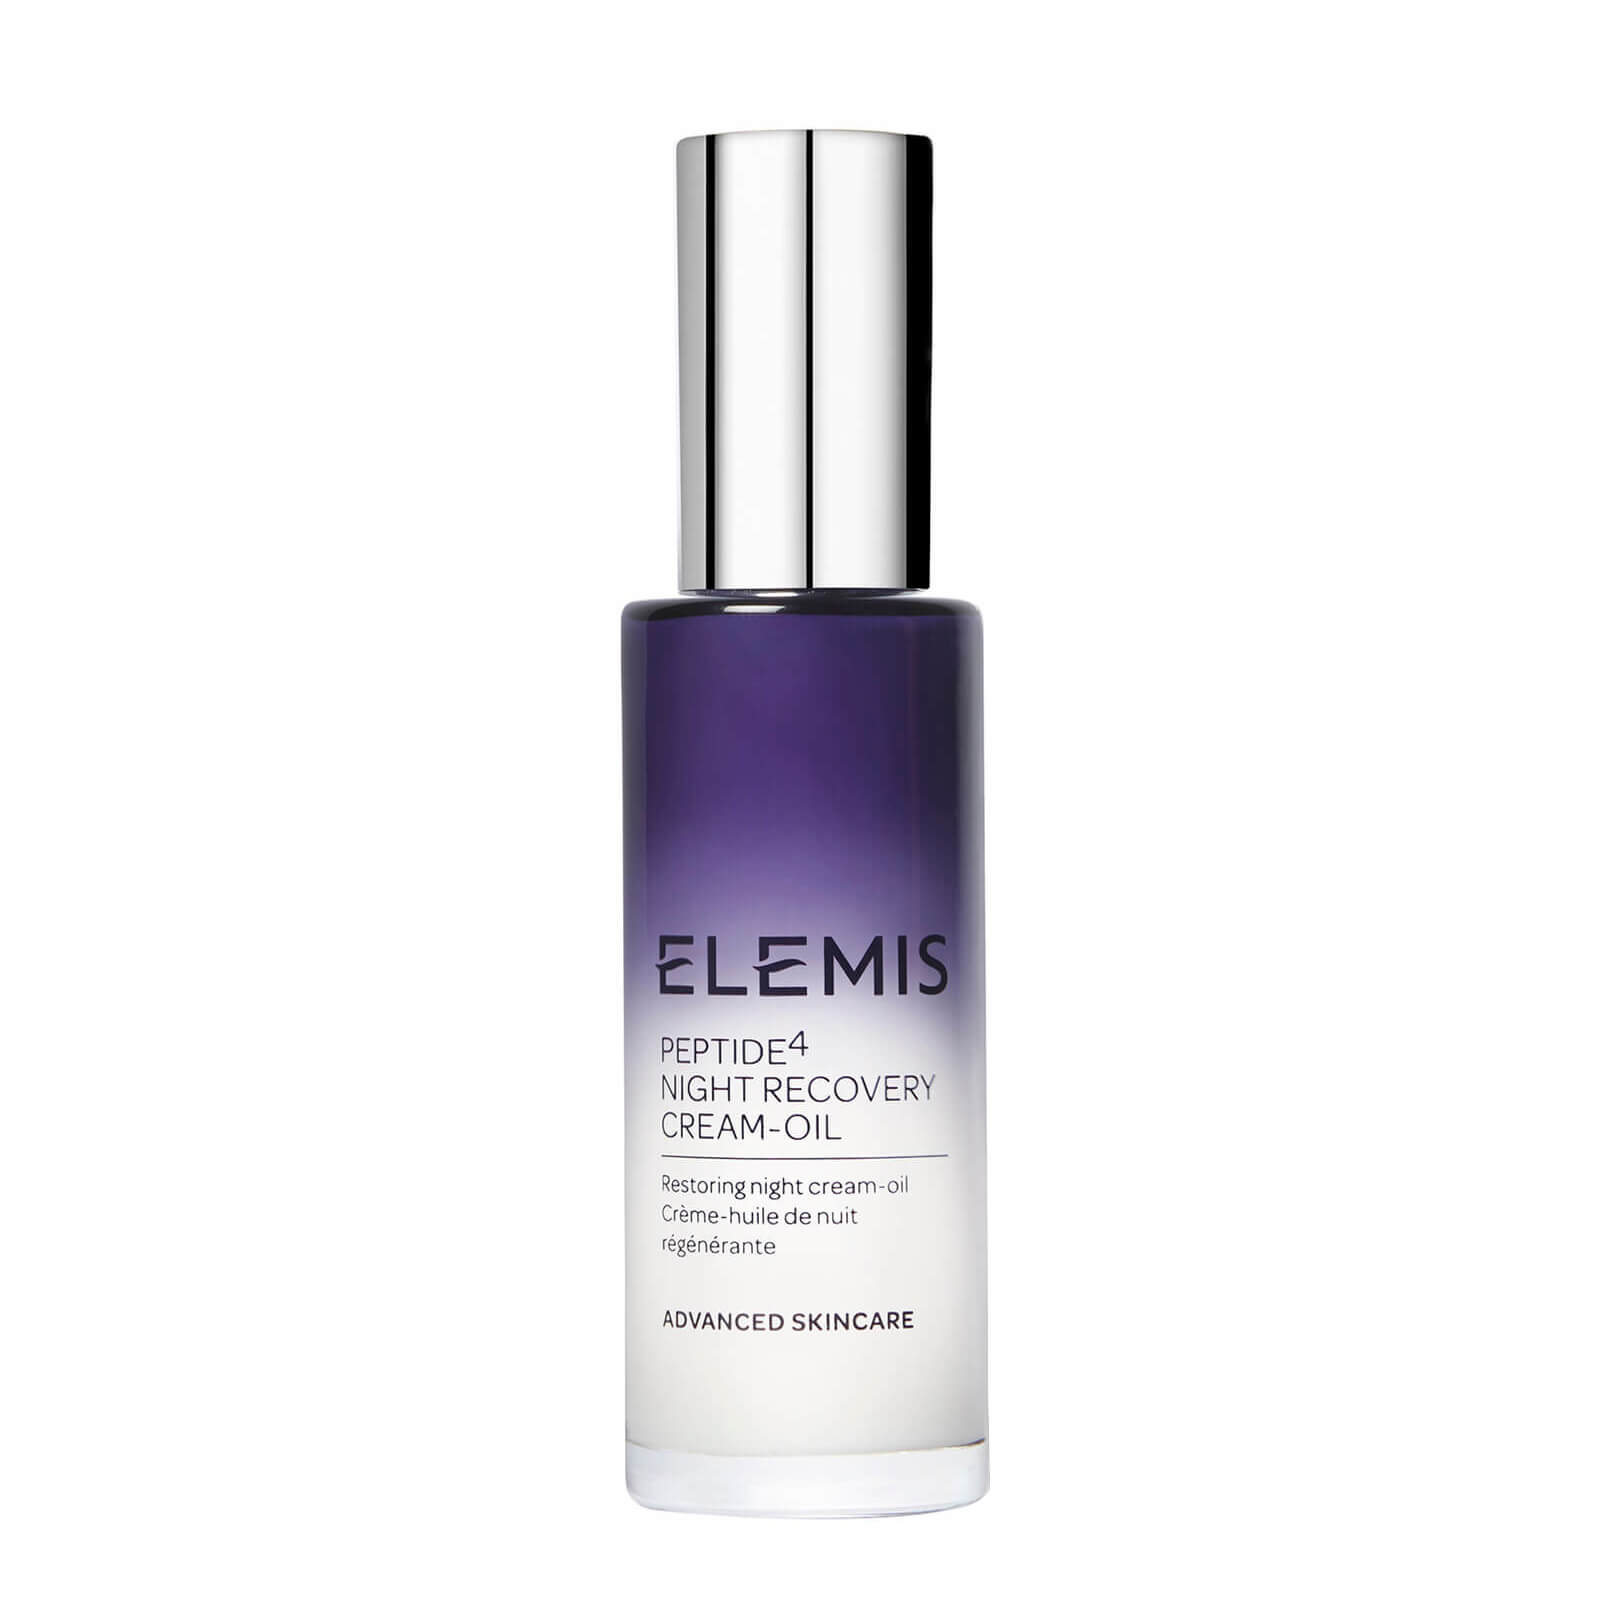   LookFantastic Elemis Peptide4 Night Recovery Cream-Oil 30ml